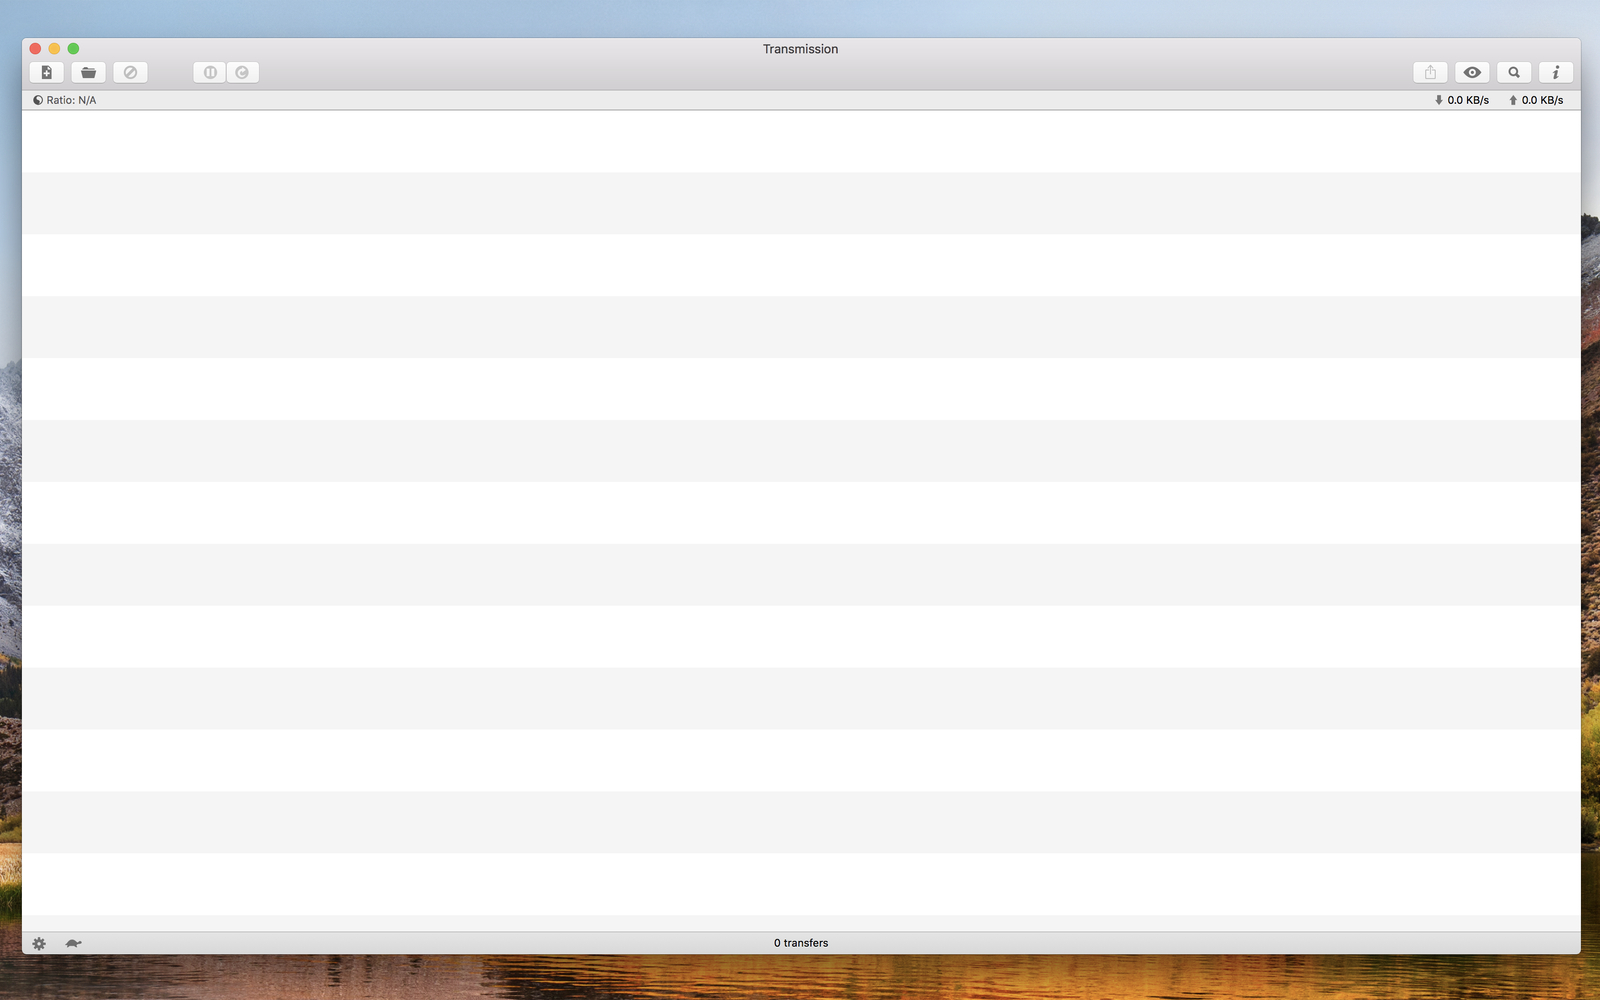 torrent downloaded for mac